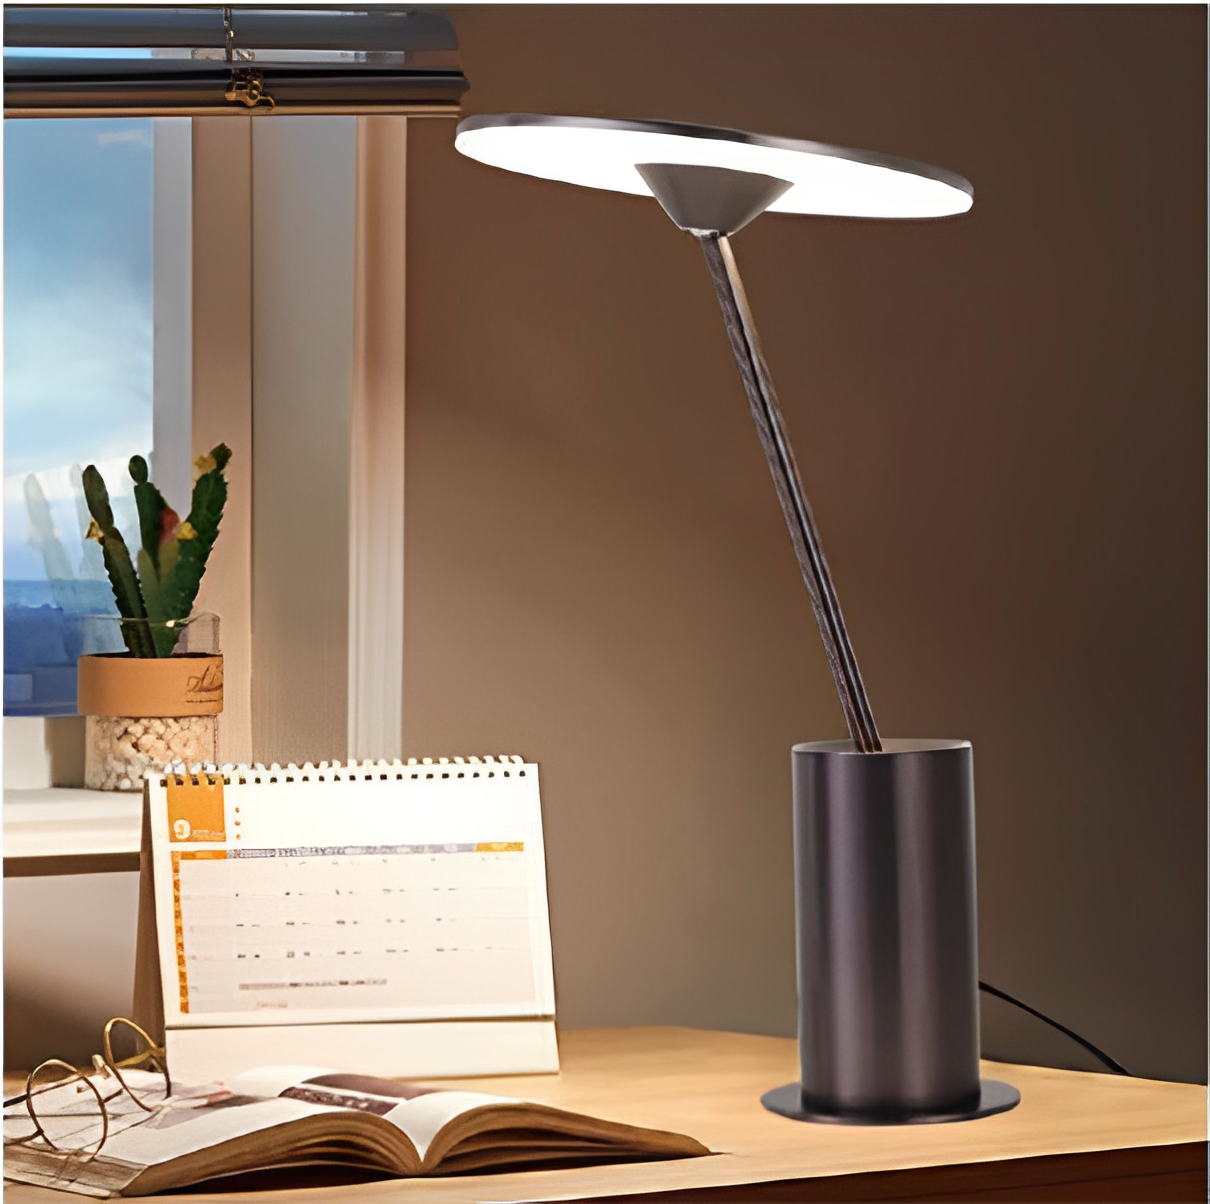 https://www.wonledlight.com/modern-creative-luxury-hotel-home-decoative-metal-base-bed-side-indoor-led-table-lamp-product/